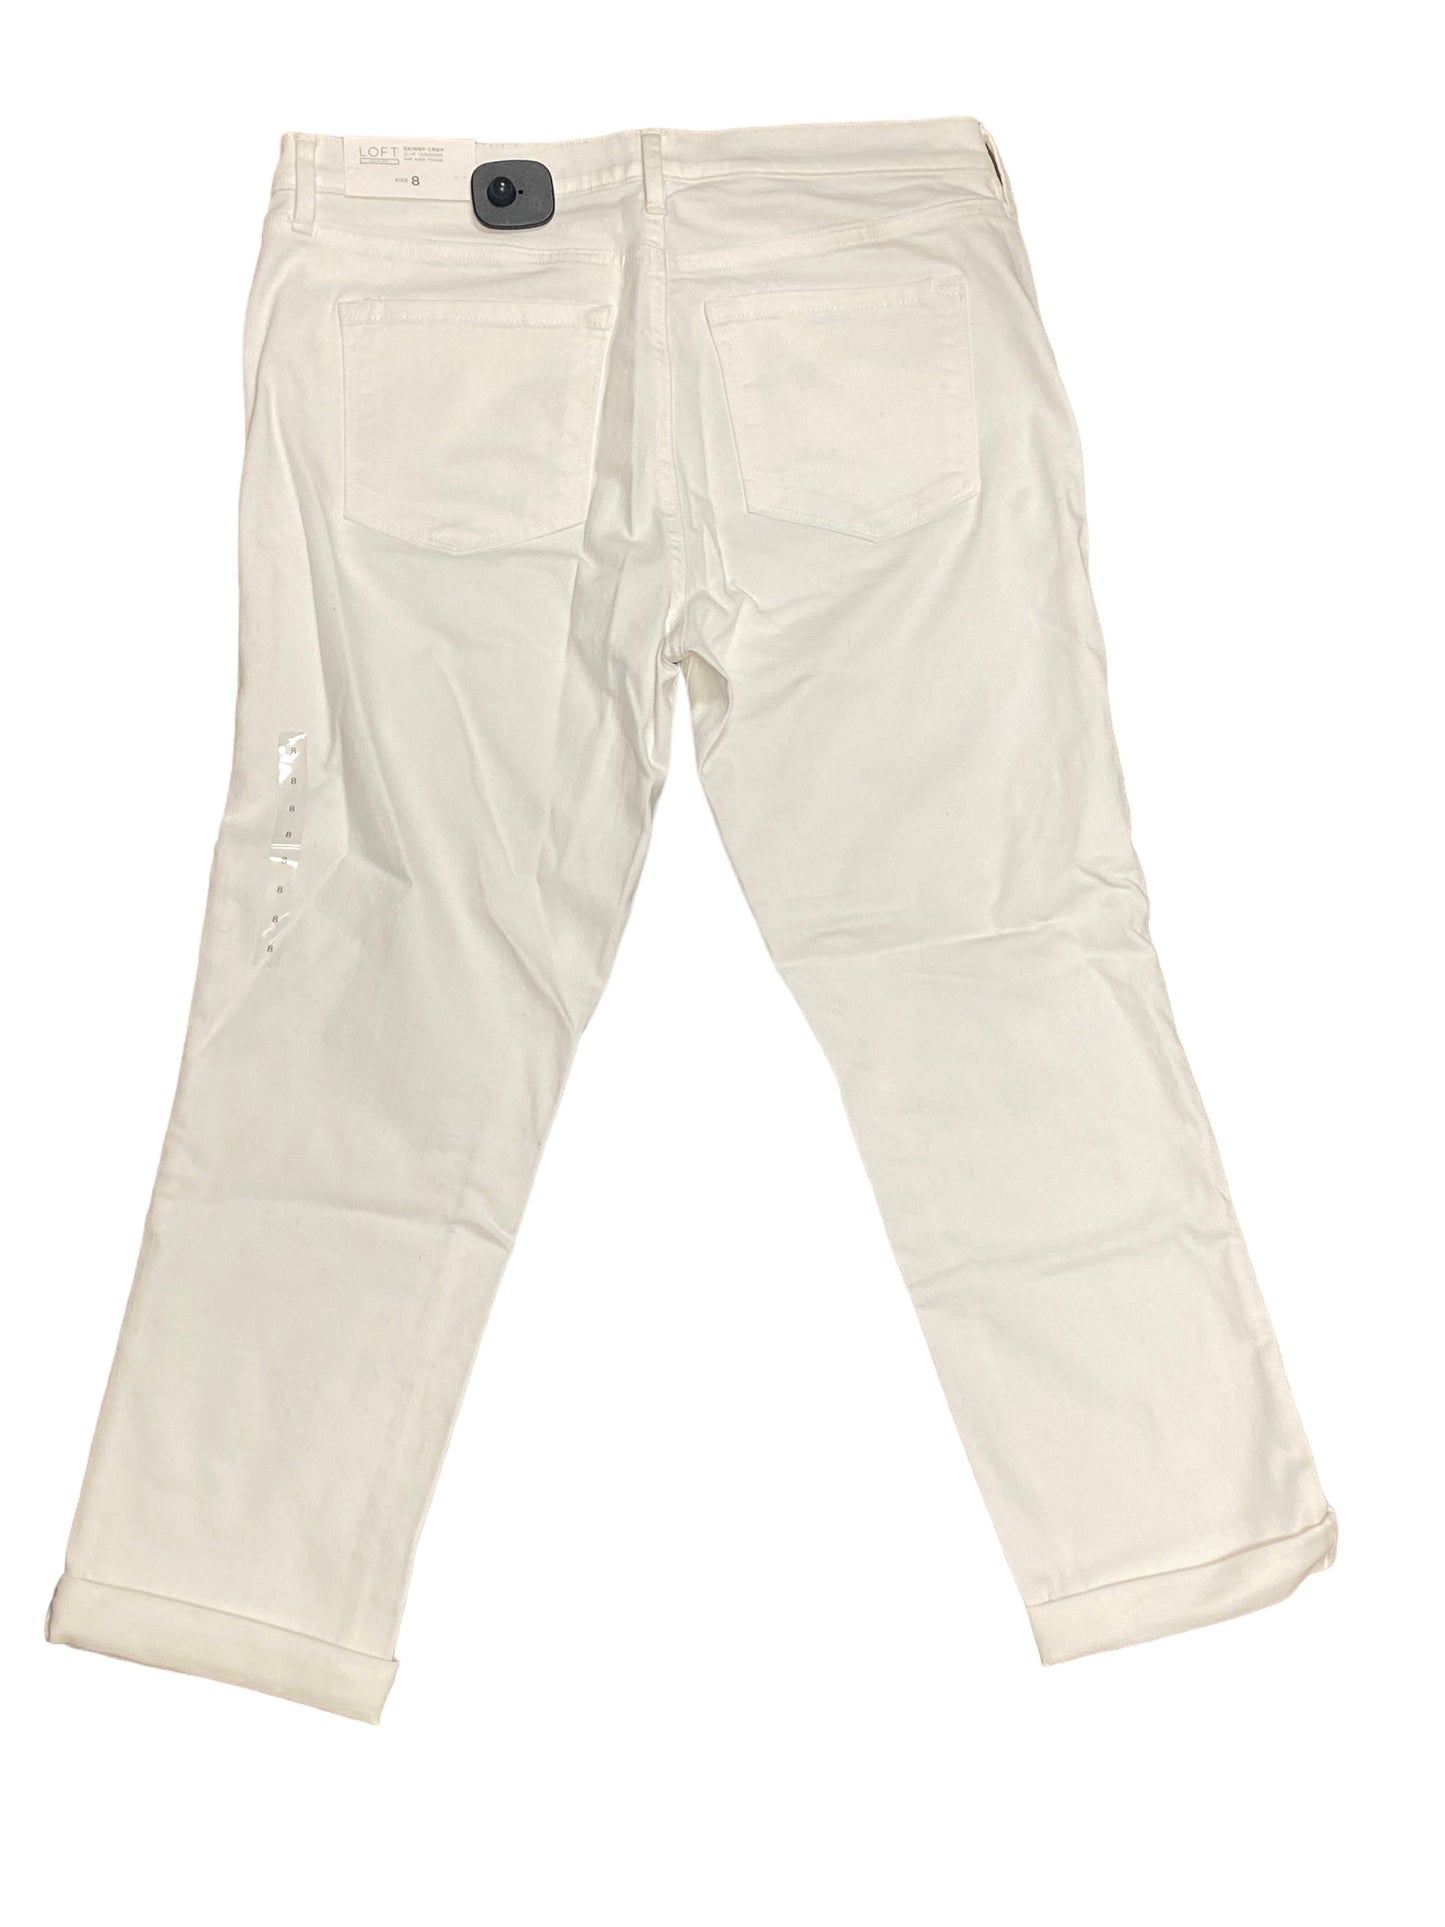 White Jeans Cropped Loft, Size 8